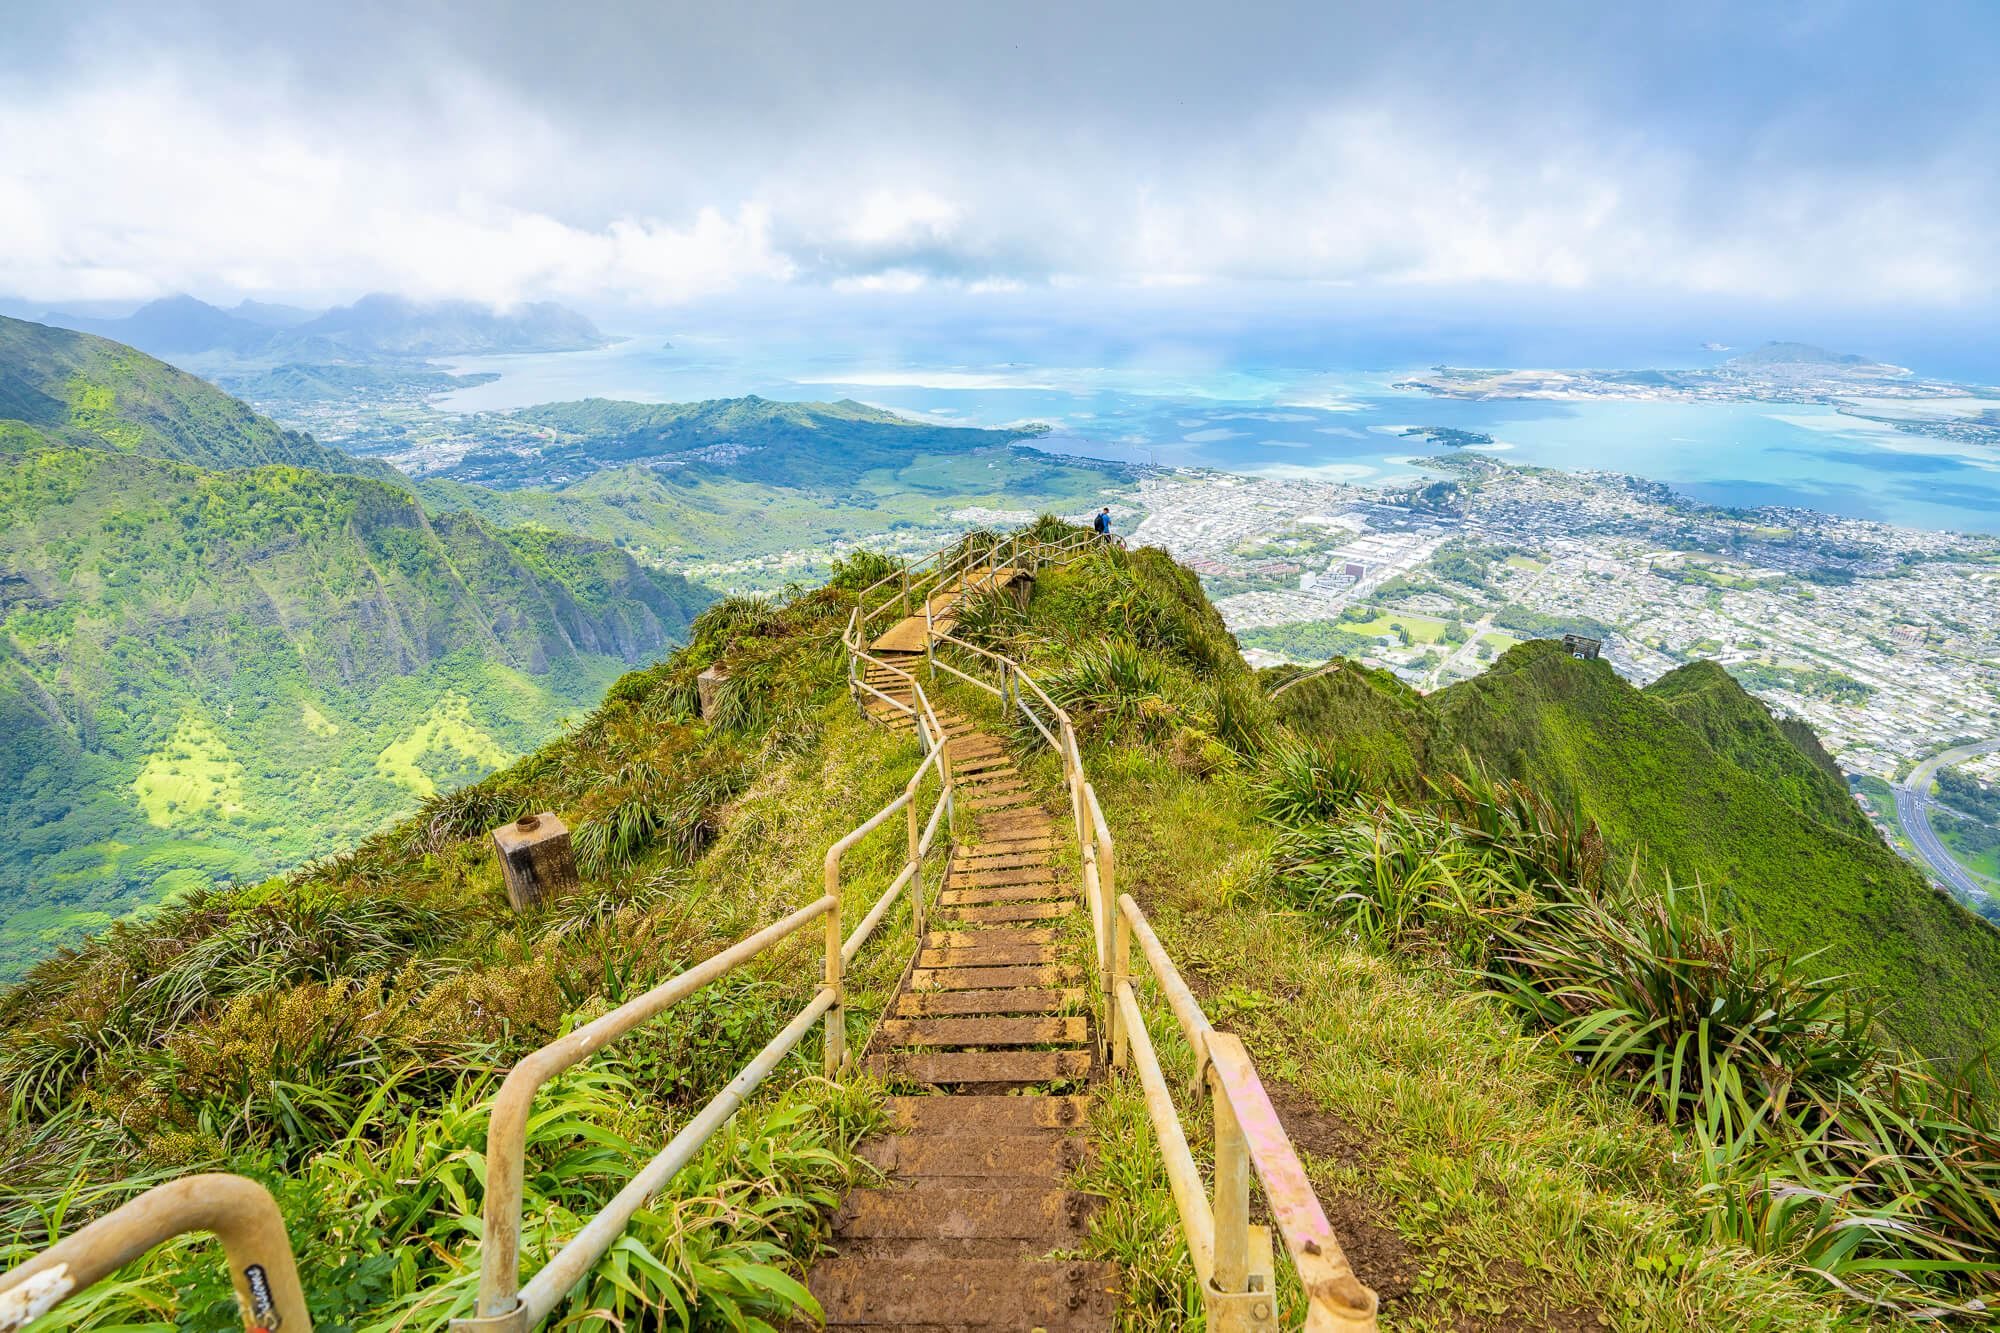 The stairway to heaven on the Moanalua middle ridge hike in Oahu, Hawaii shot by Jake Landon Schwartz | photo by jake landon schwartz